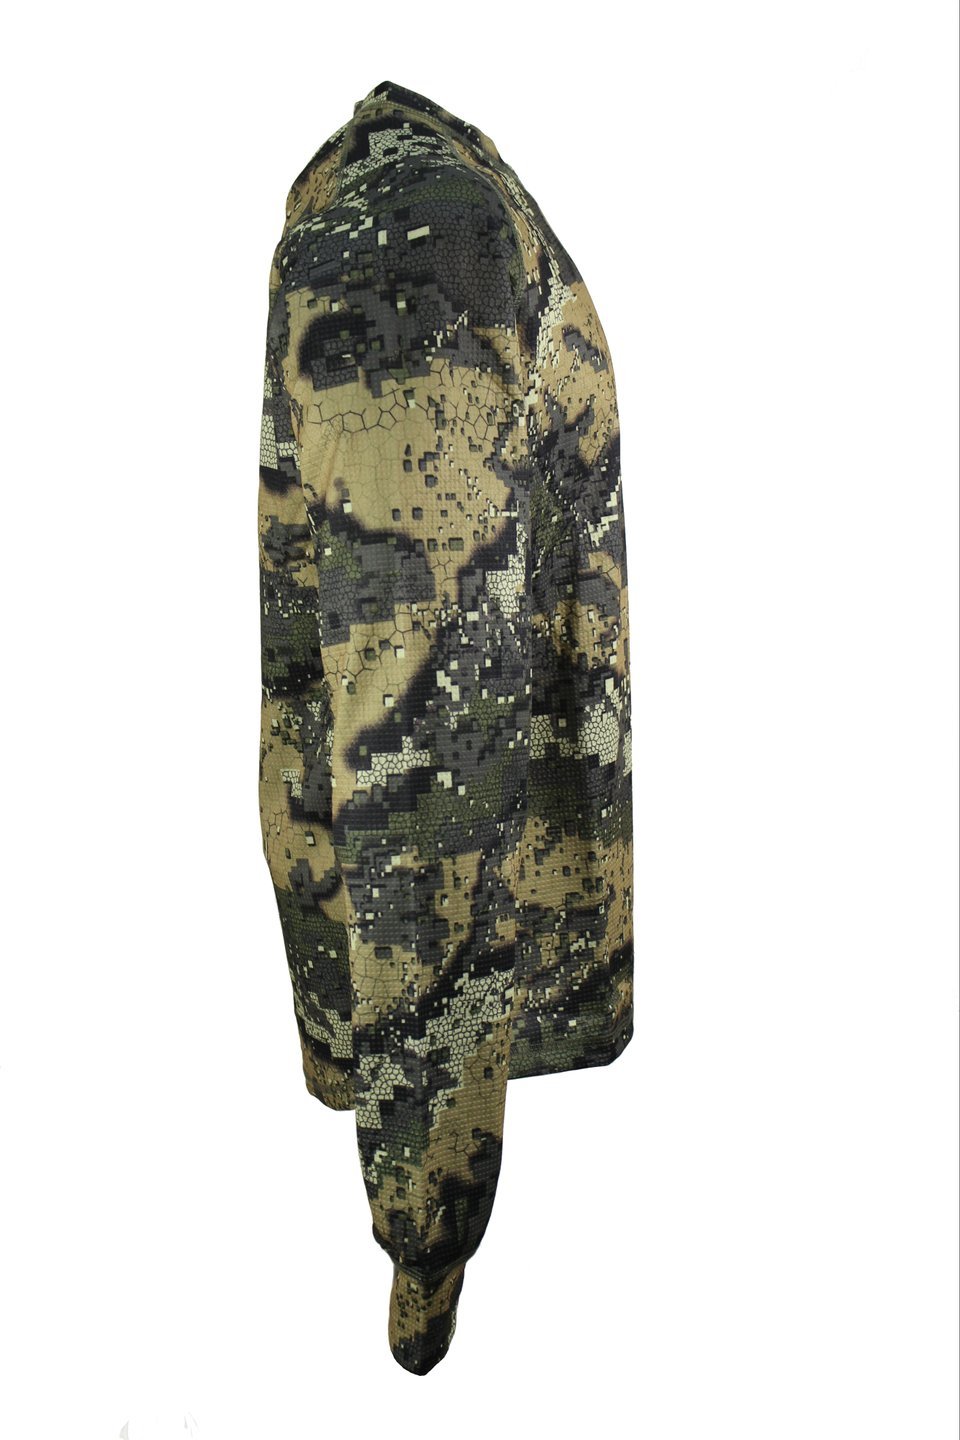 Джемпер охотничий  Remington Men's  Camouflage T-Shirt  APG Hunting Camo, цвет Optifade, р. 4XL (RM1305-999)